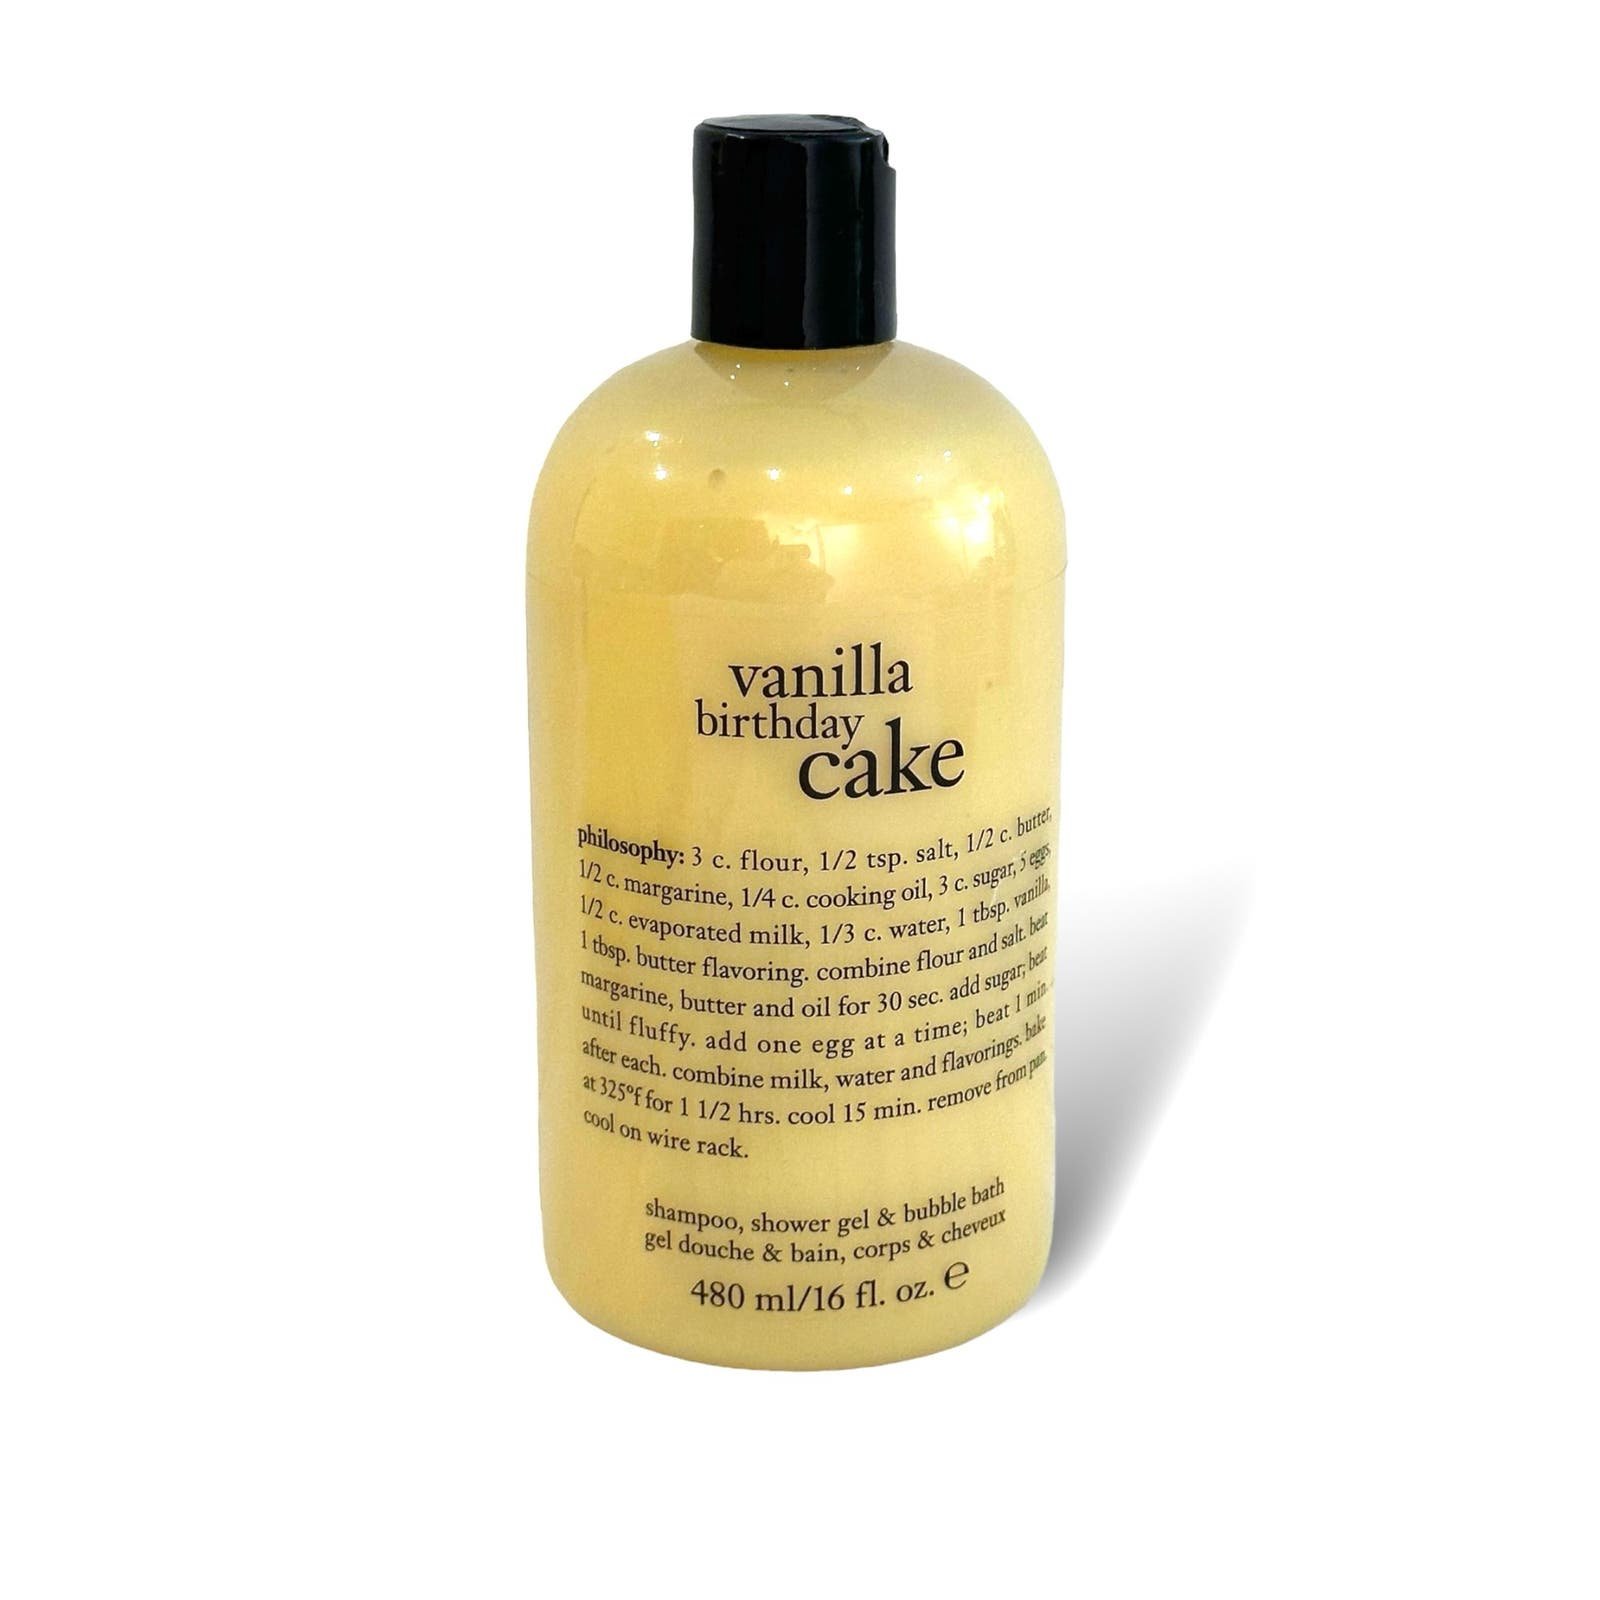 Philosophy Vanilla Birthday Cake Shampoo Shower Gel Bubble Bath Sealed 16 oz 1gp6eYOmL